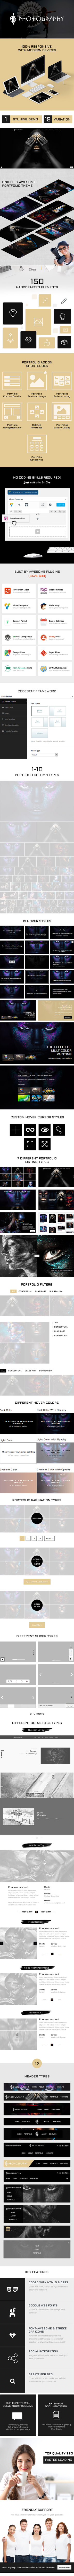 FullScreen Artist - Portfolio, Photography WordPress Theme - 1